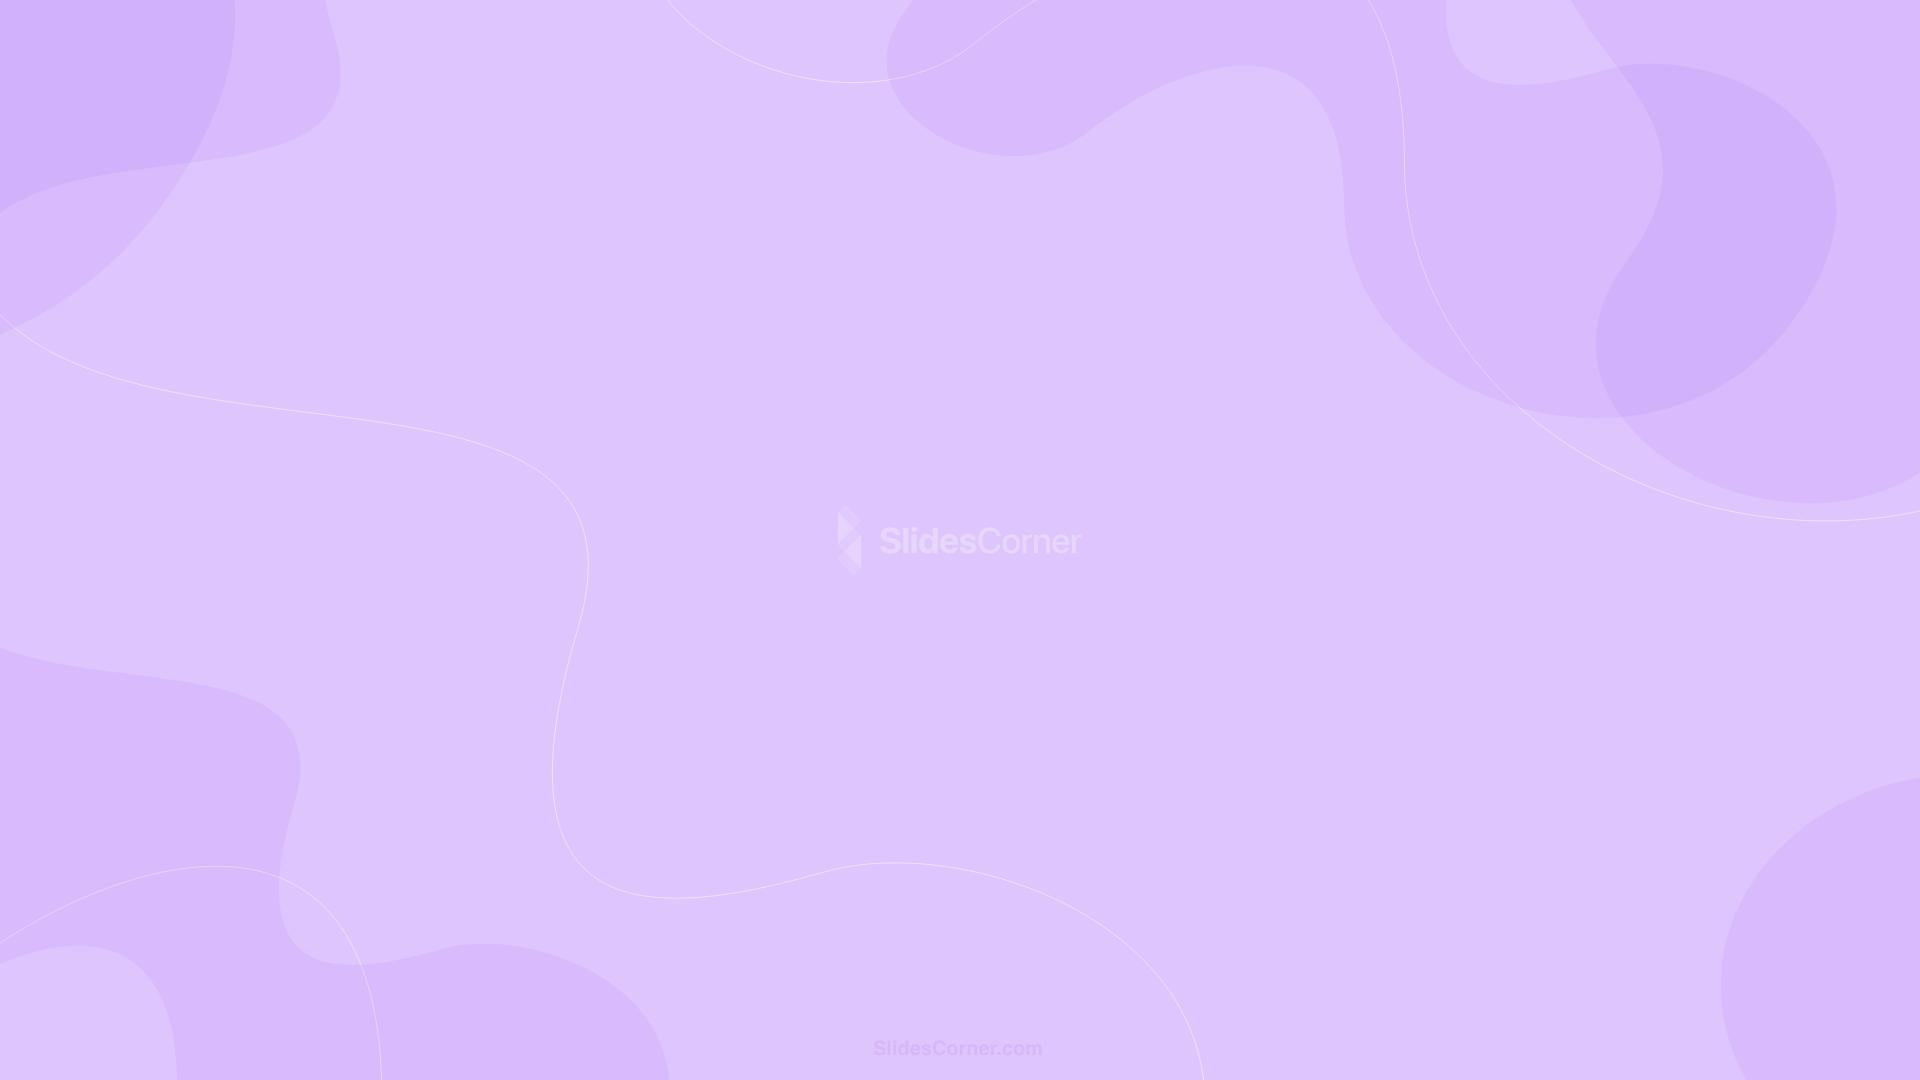 Purple Pastel Plain Background - SlidesCorner